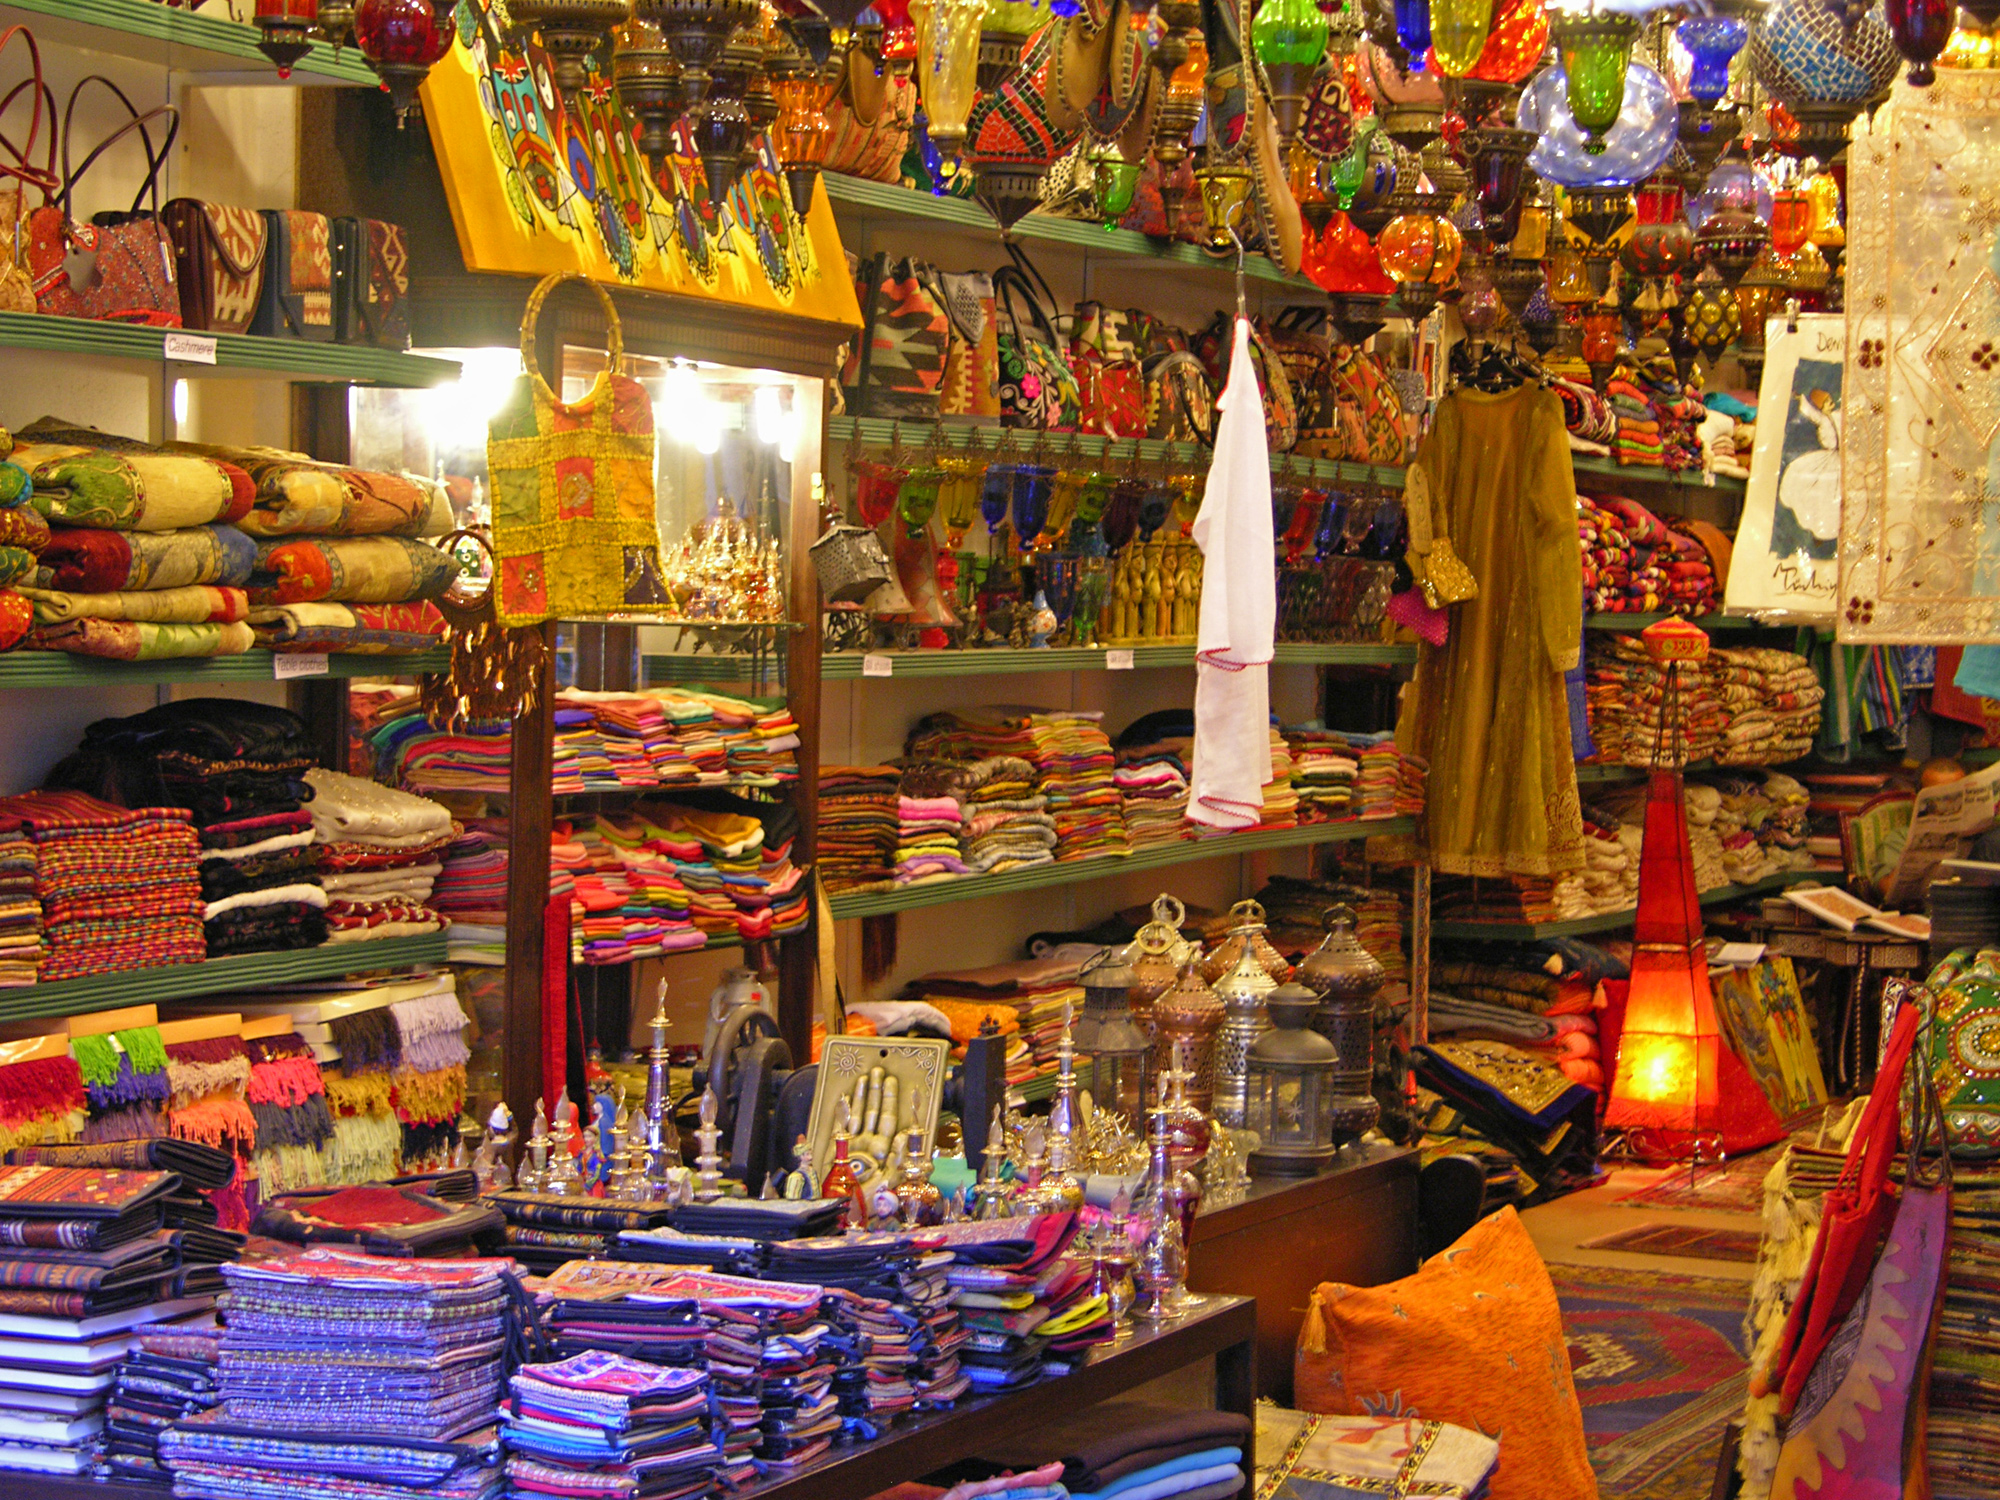 Souvenirs shop in Turkey